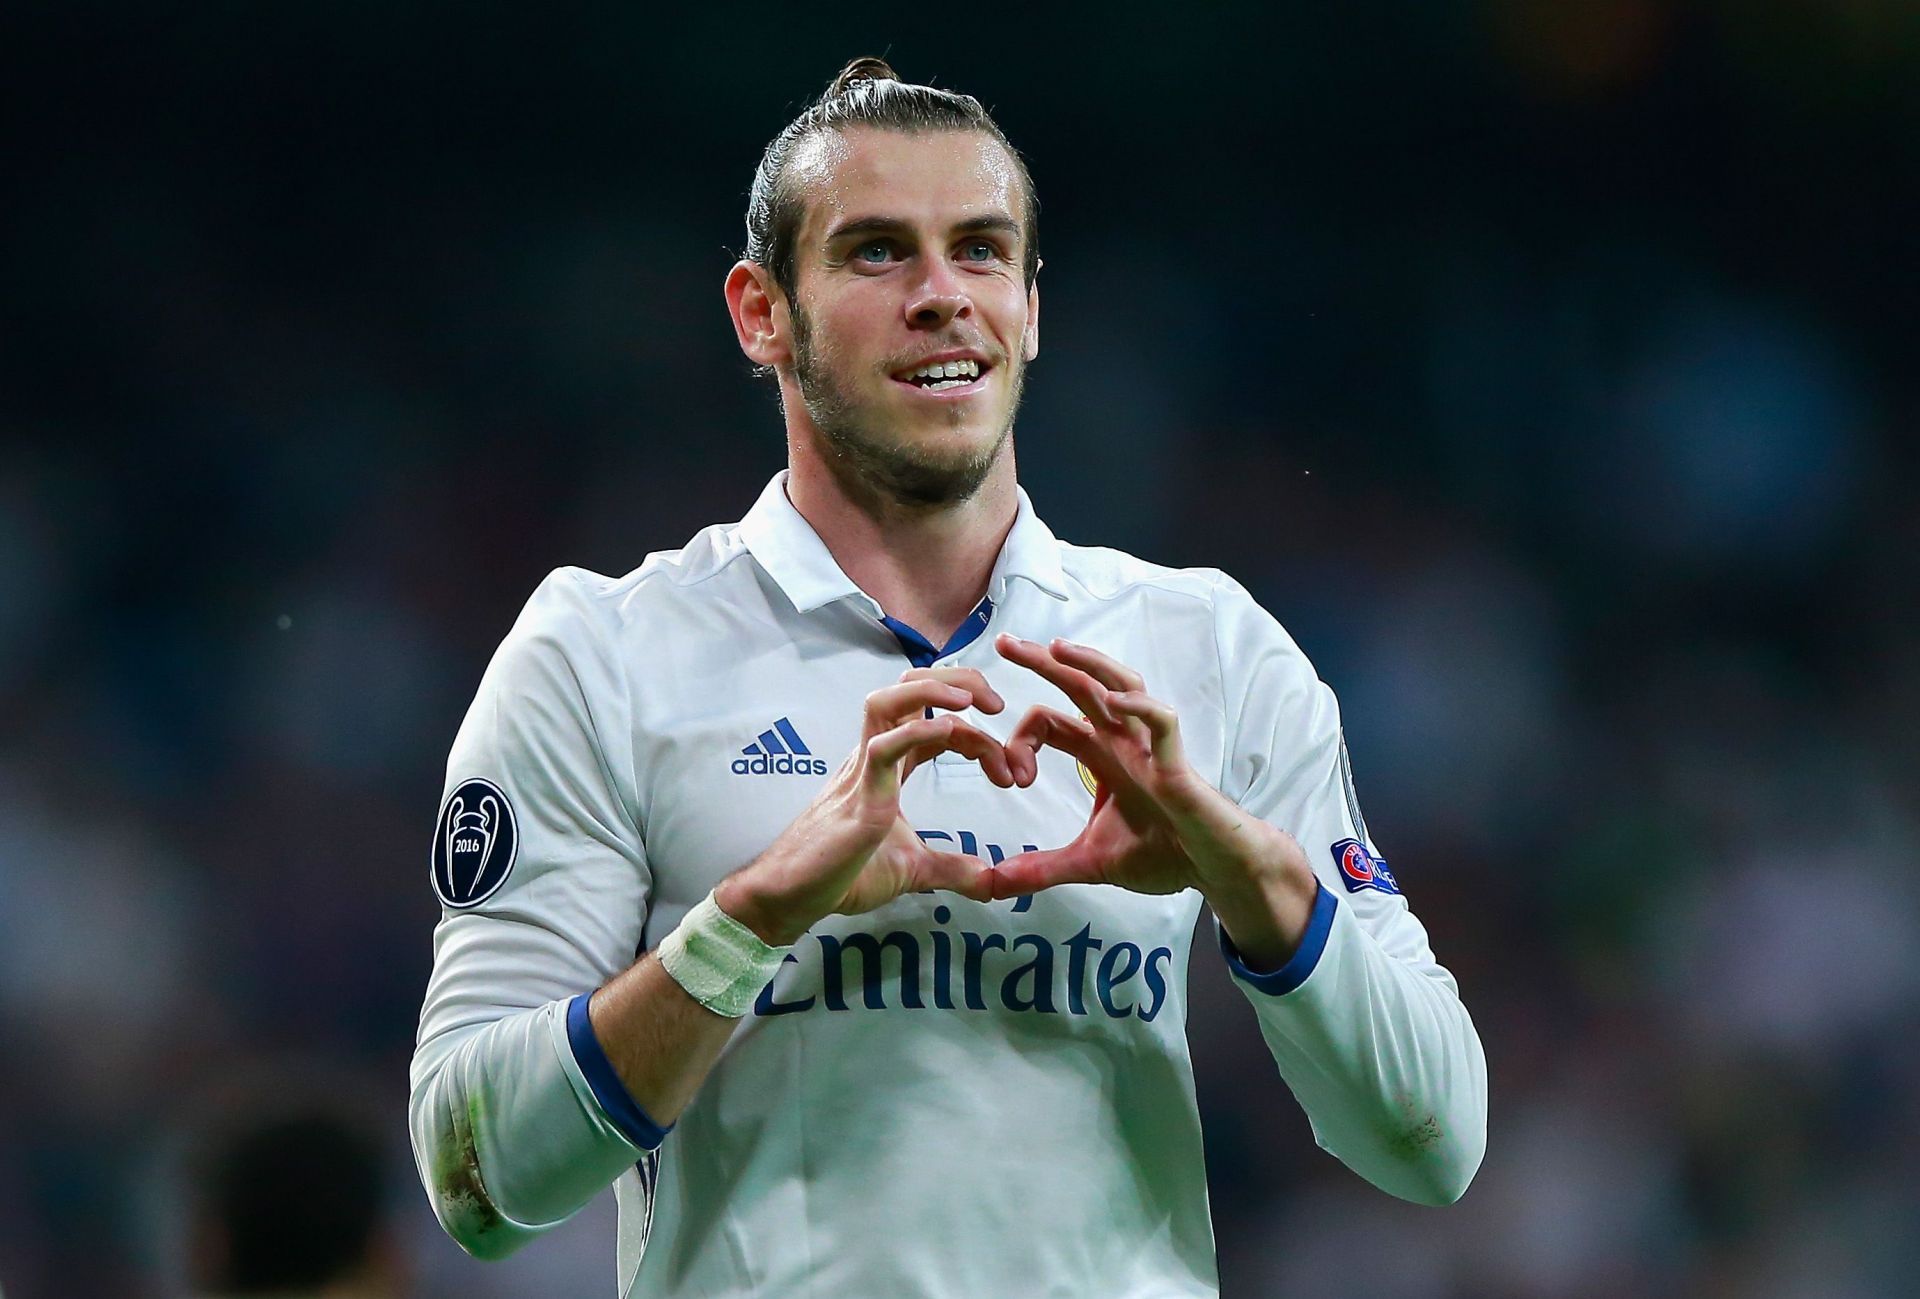 Gareth Bale has fallen down the pecking order at the Santiago Bernabeu